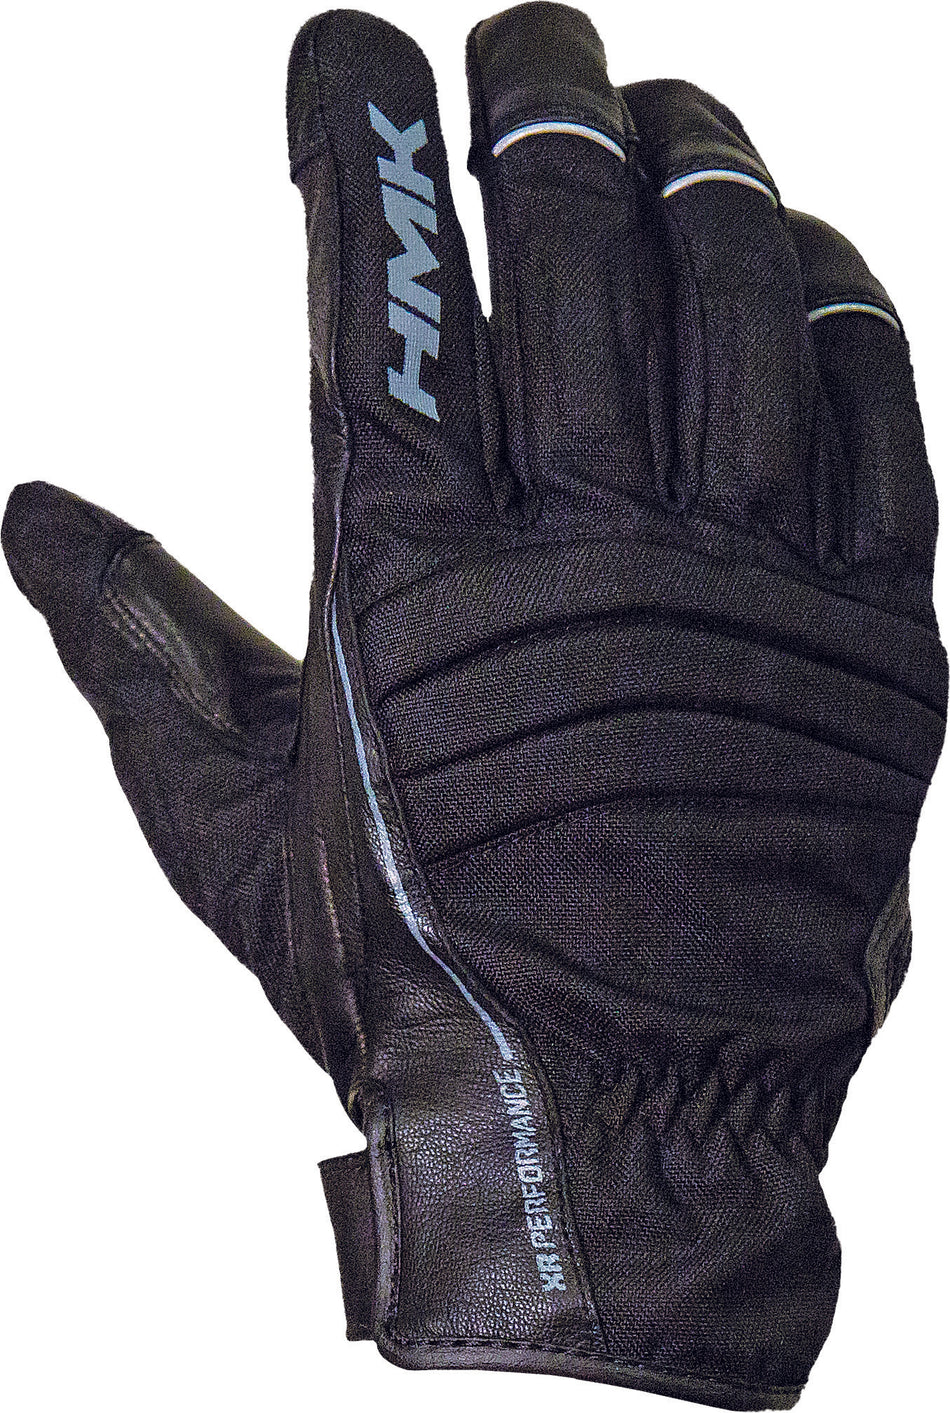 HMK Team Glove Xs S/M Black HM7GTEABXS